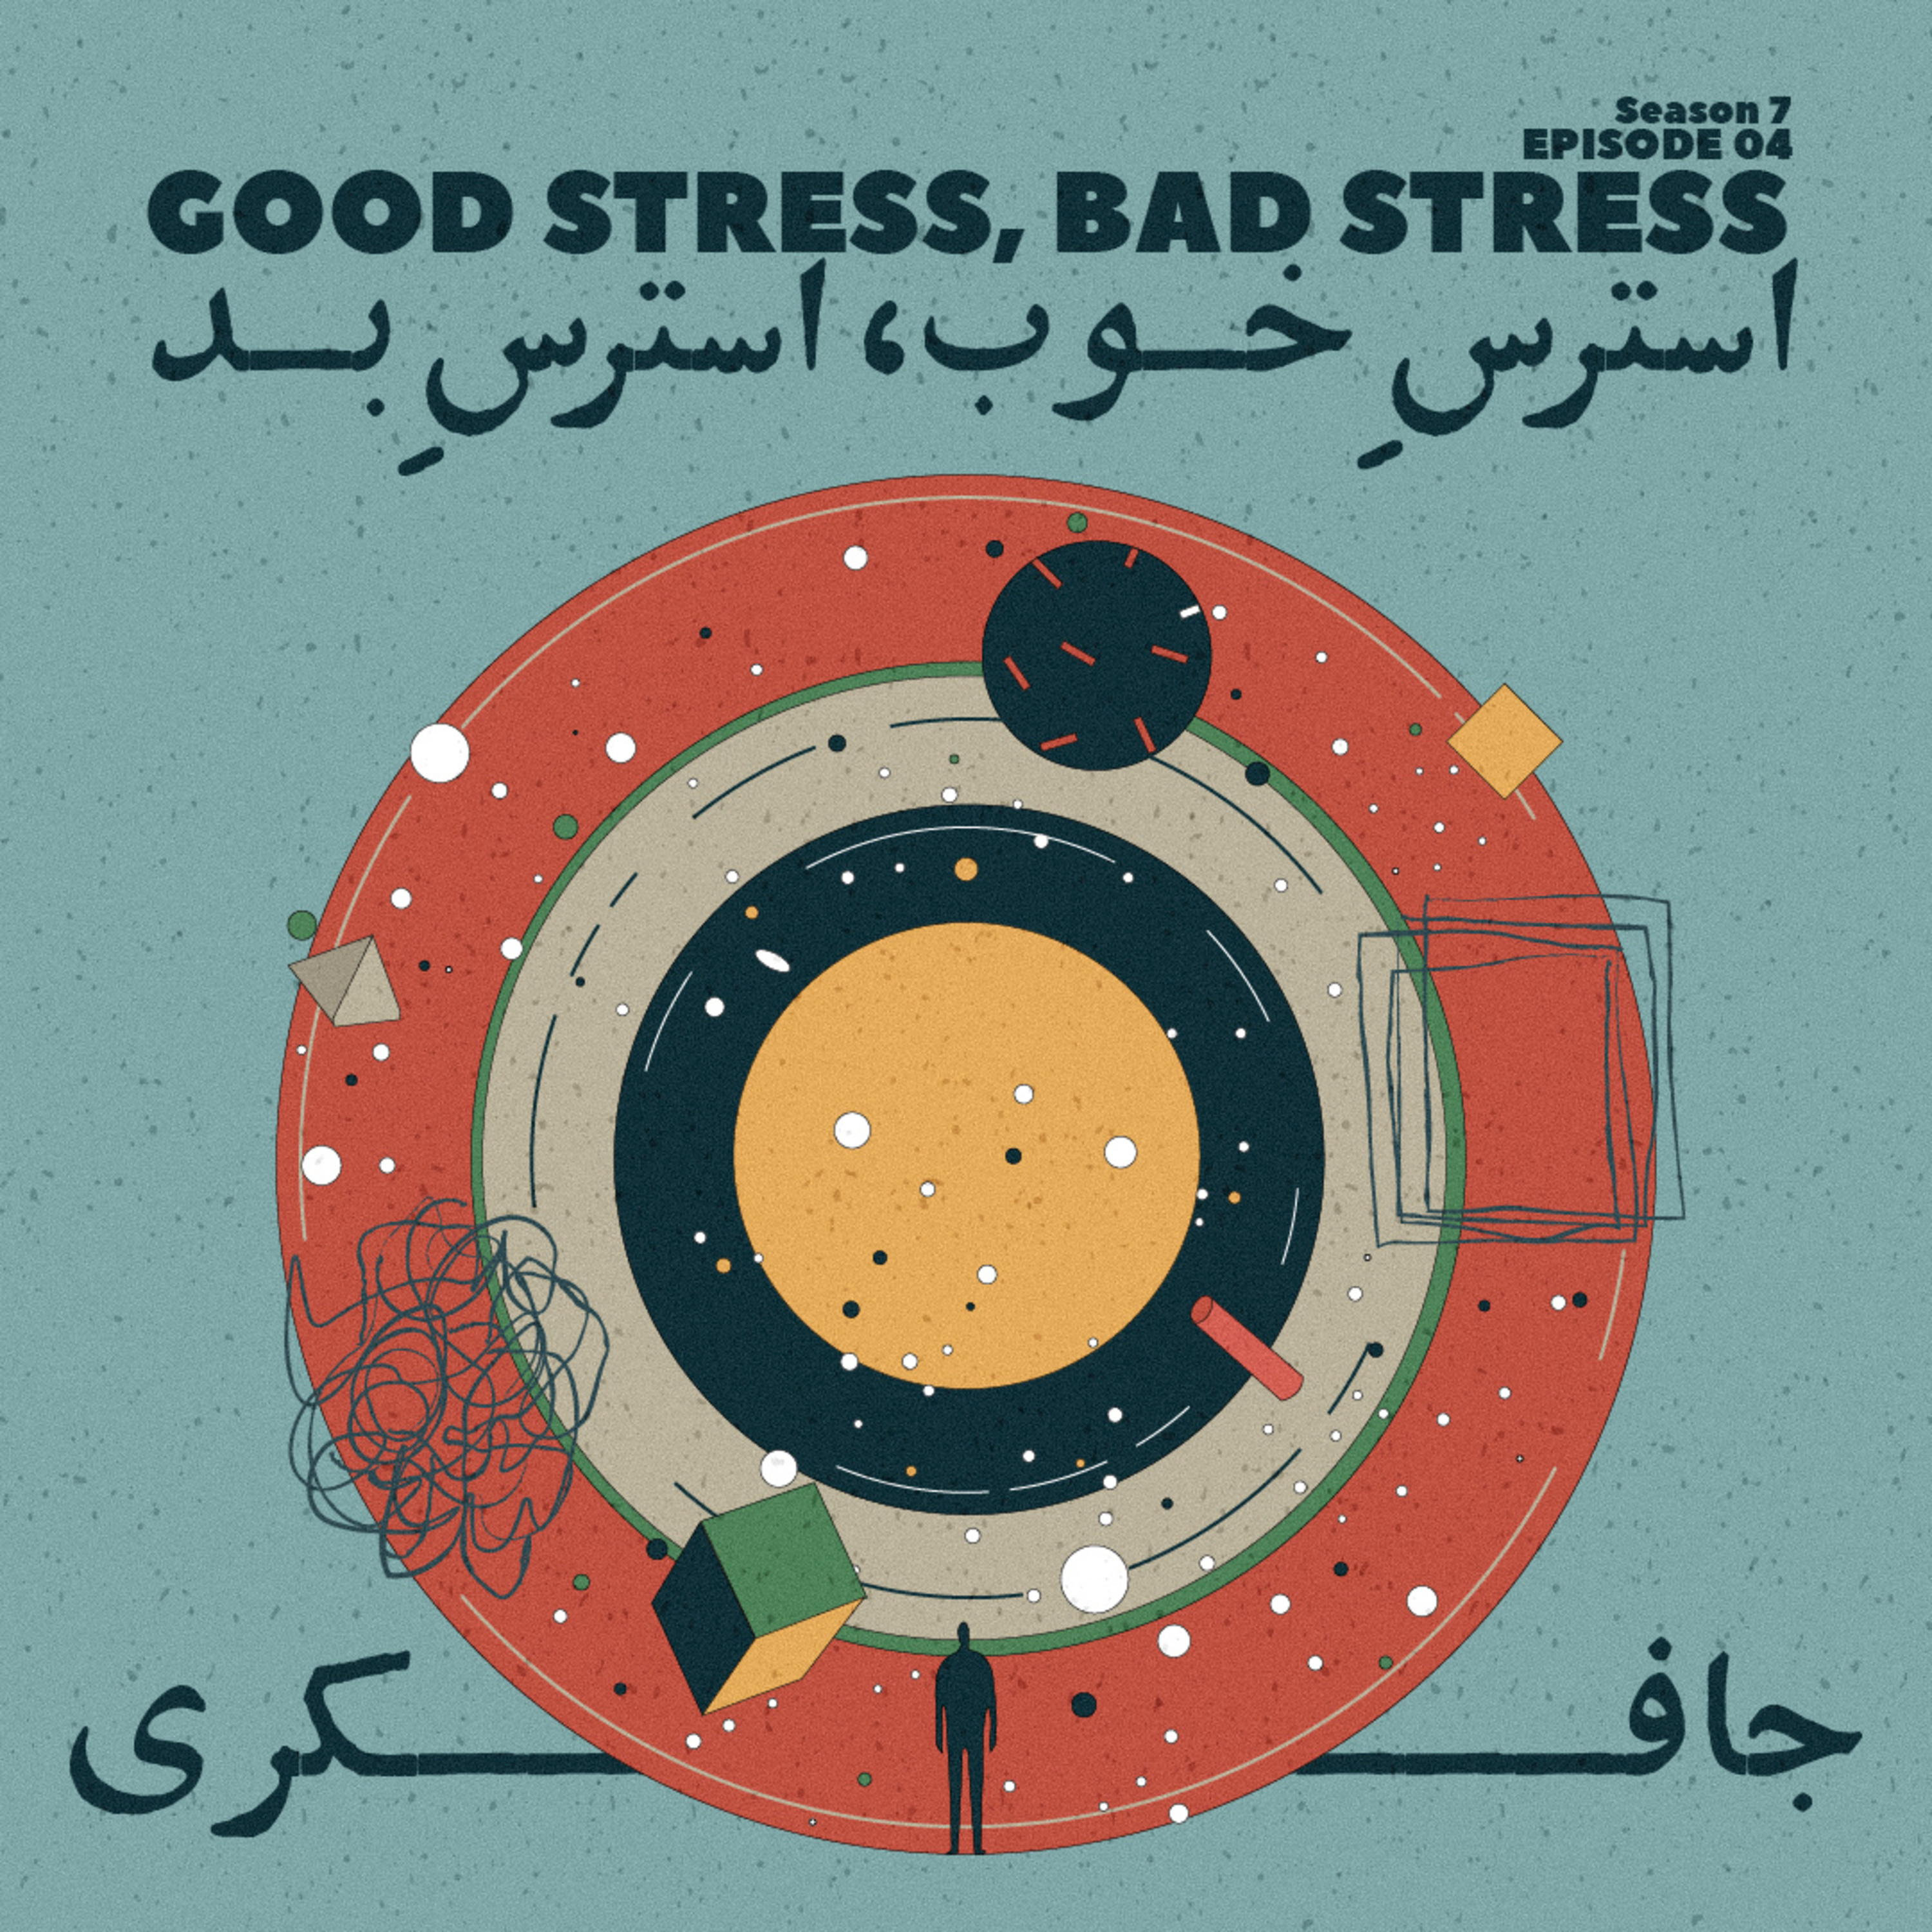 Episode 04 - Good Stress, Bad Stress (استرس خوب استرس بد)